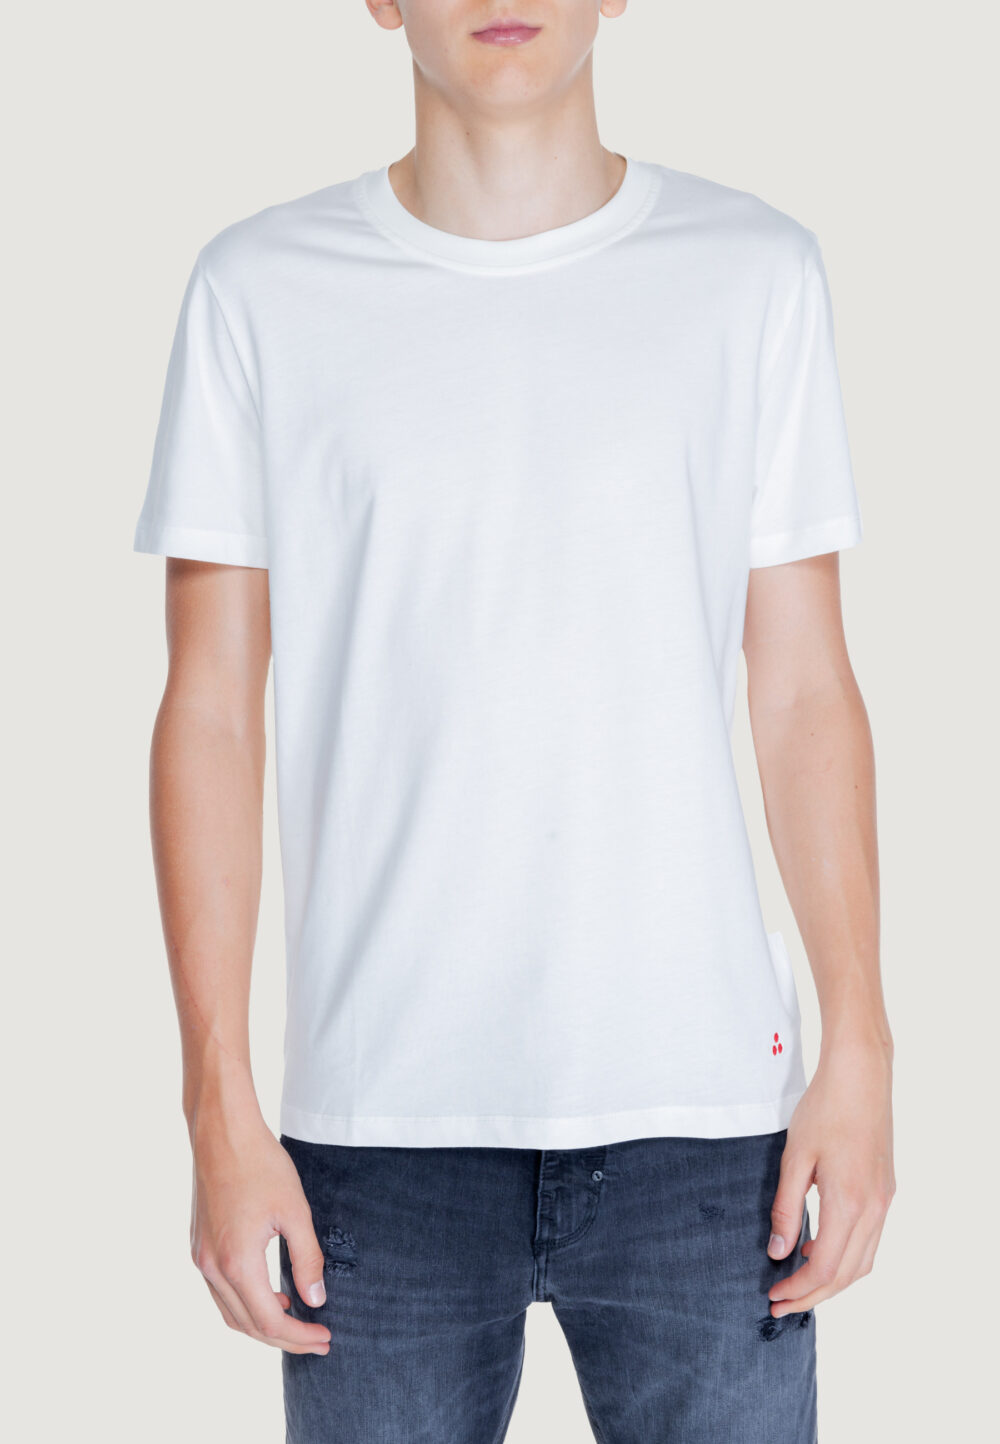 T-shirt PEUTEREY MANDERLY 01 Bianco - Foto 1